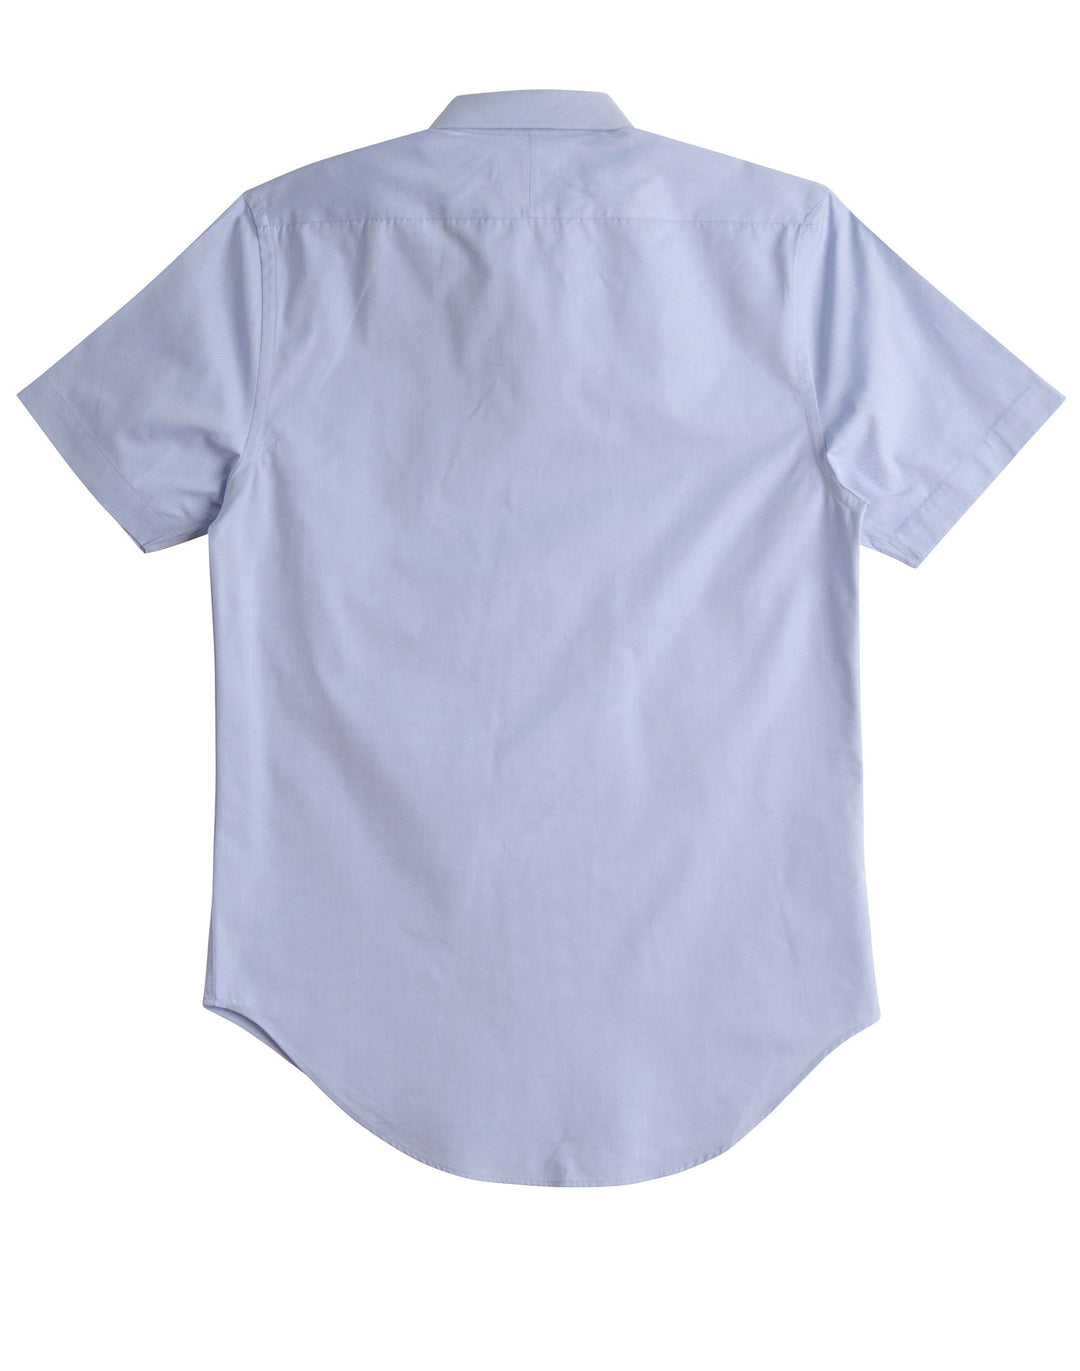 Benchmark M7040S Men's CVC Oxford Short Sleeve Shirt